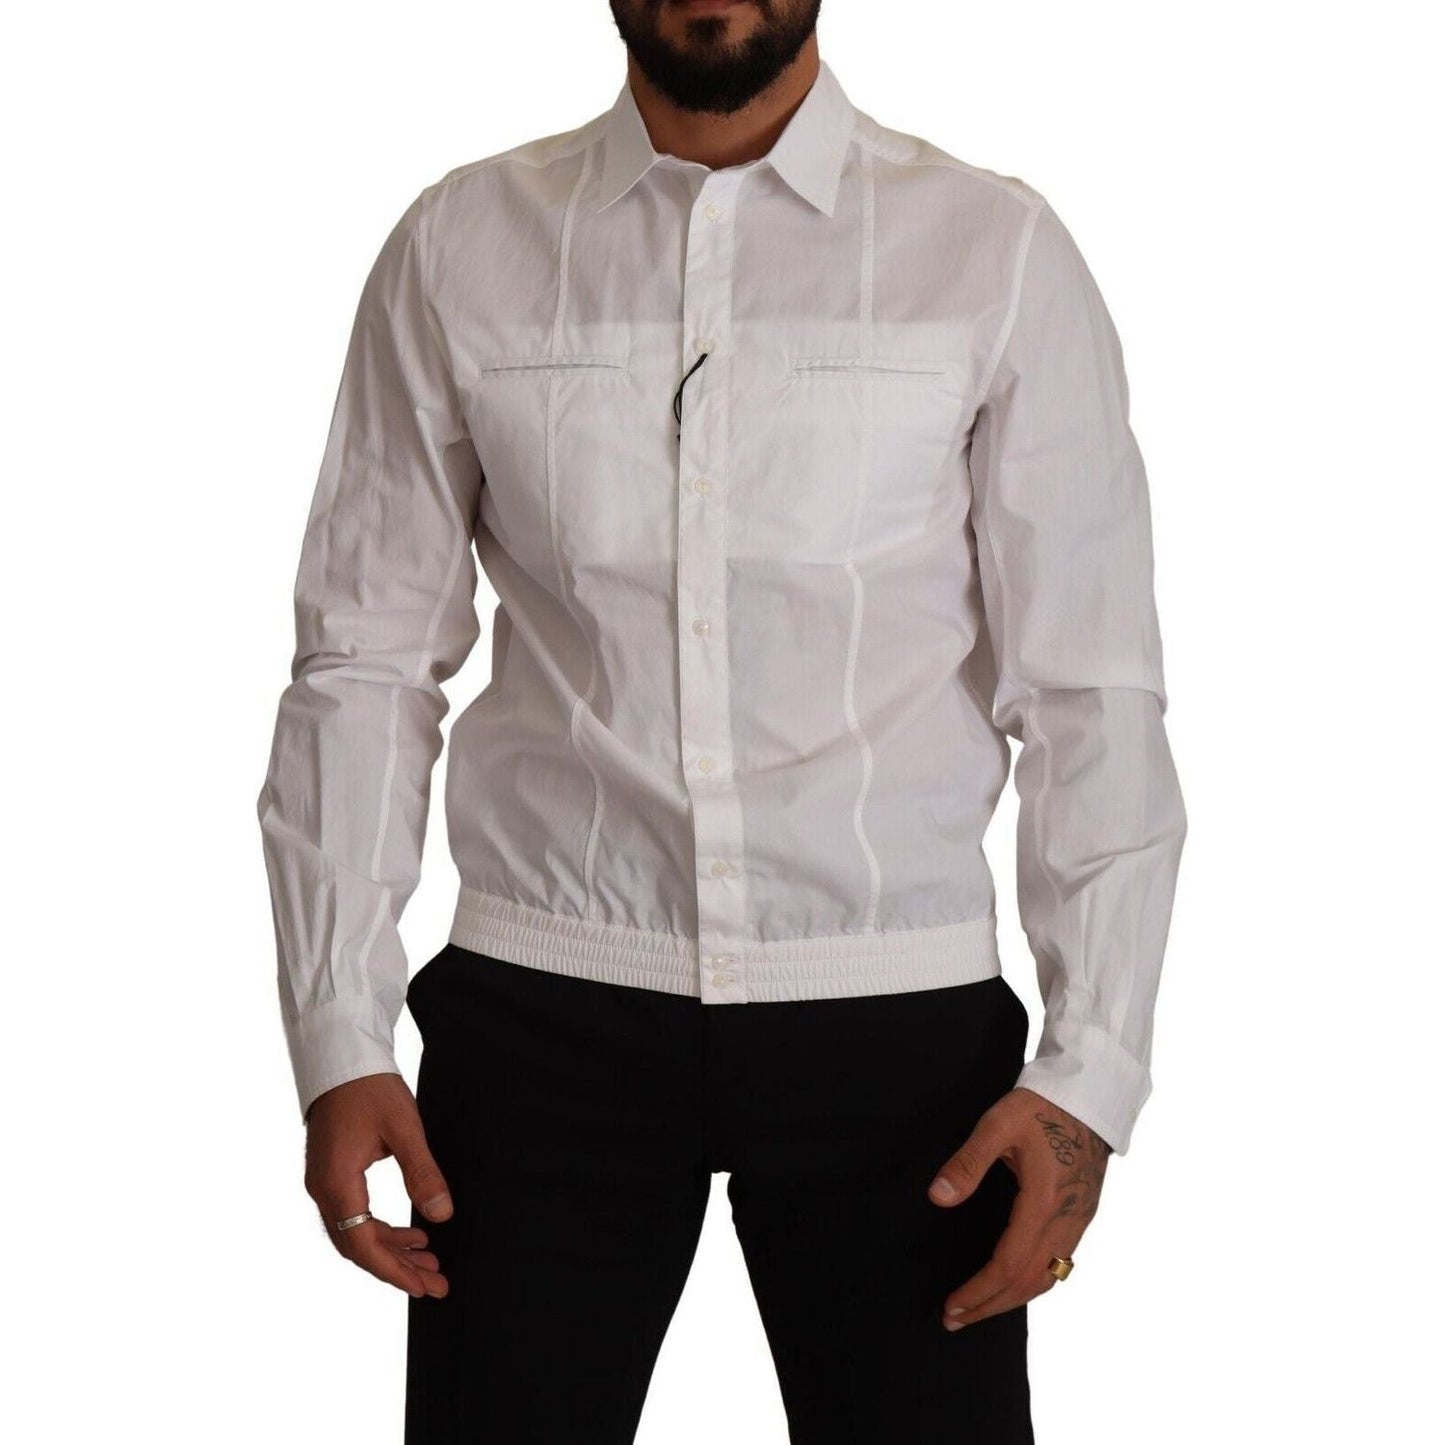 Dolce & Gabbana Elegant Italian White Cotton Shirt white-cotton-button-down-men-collared-shirt